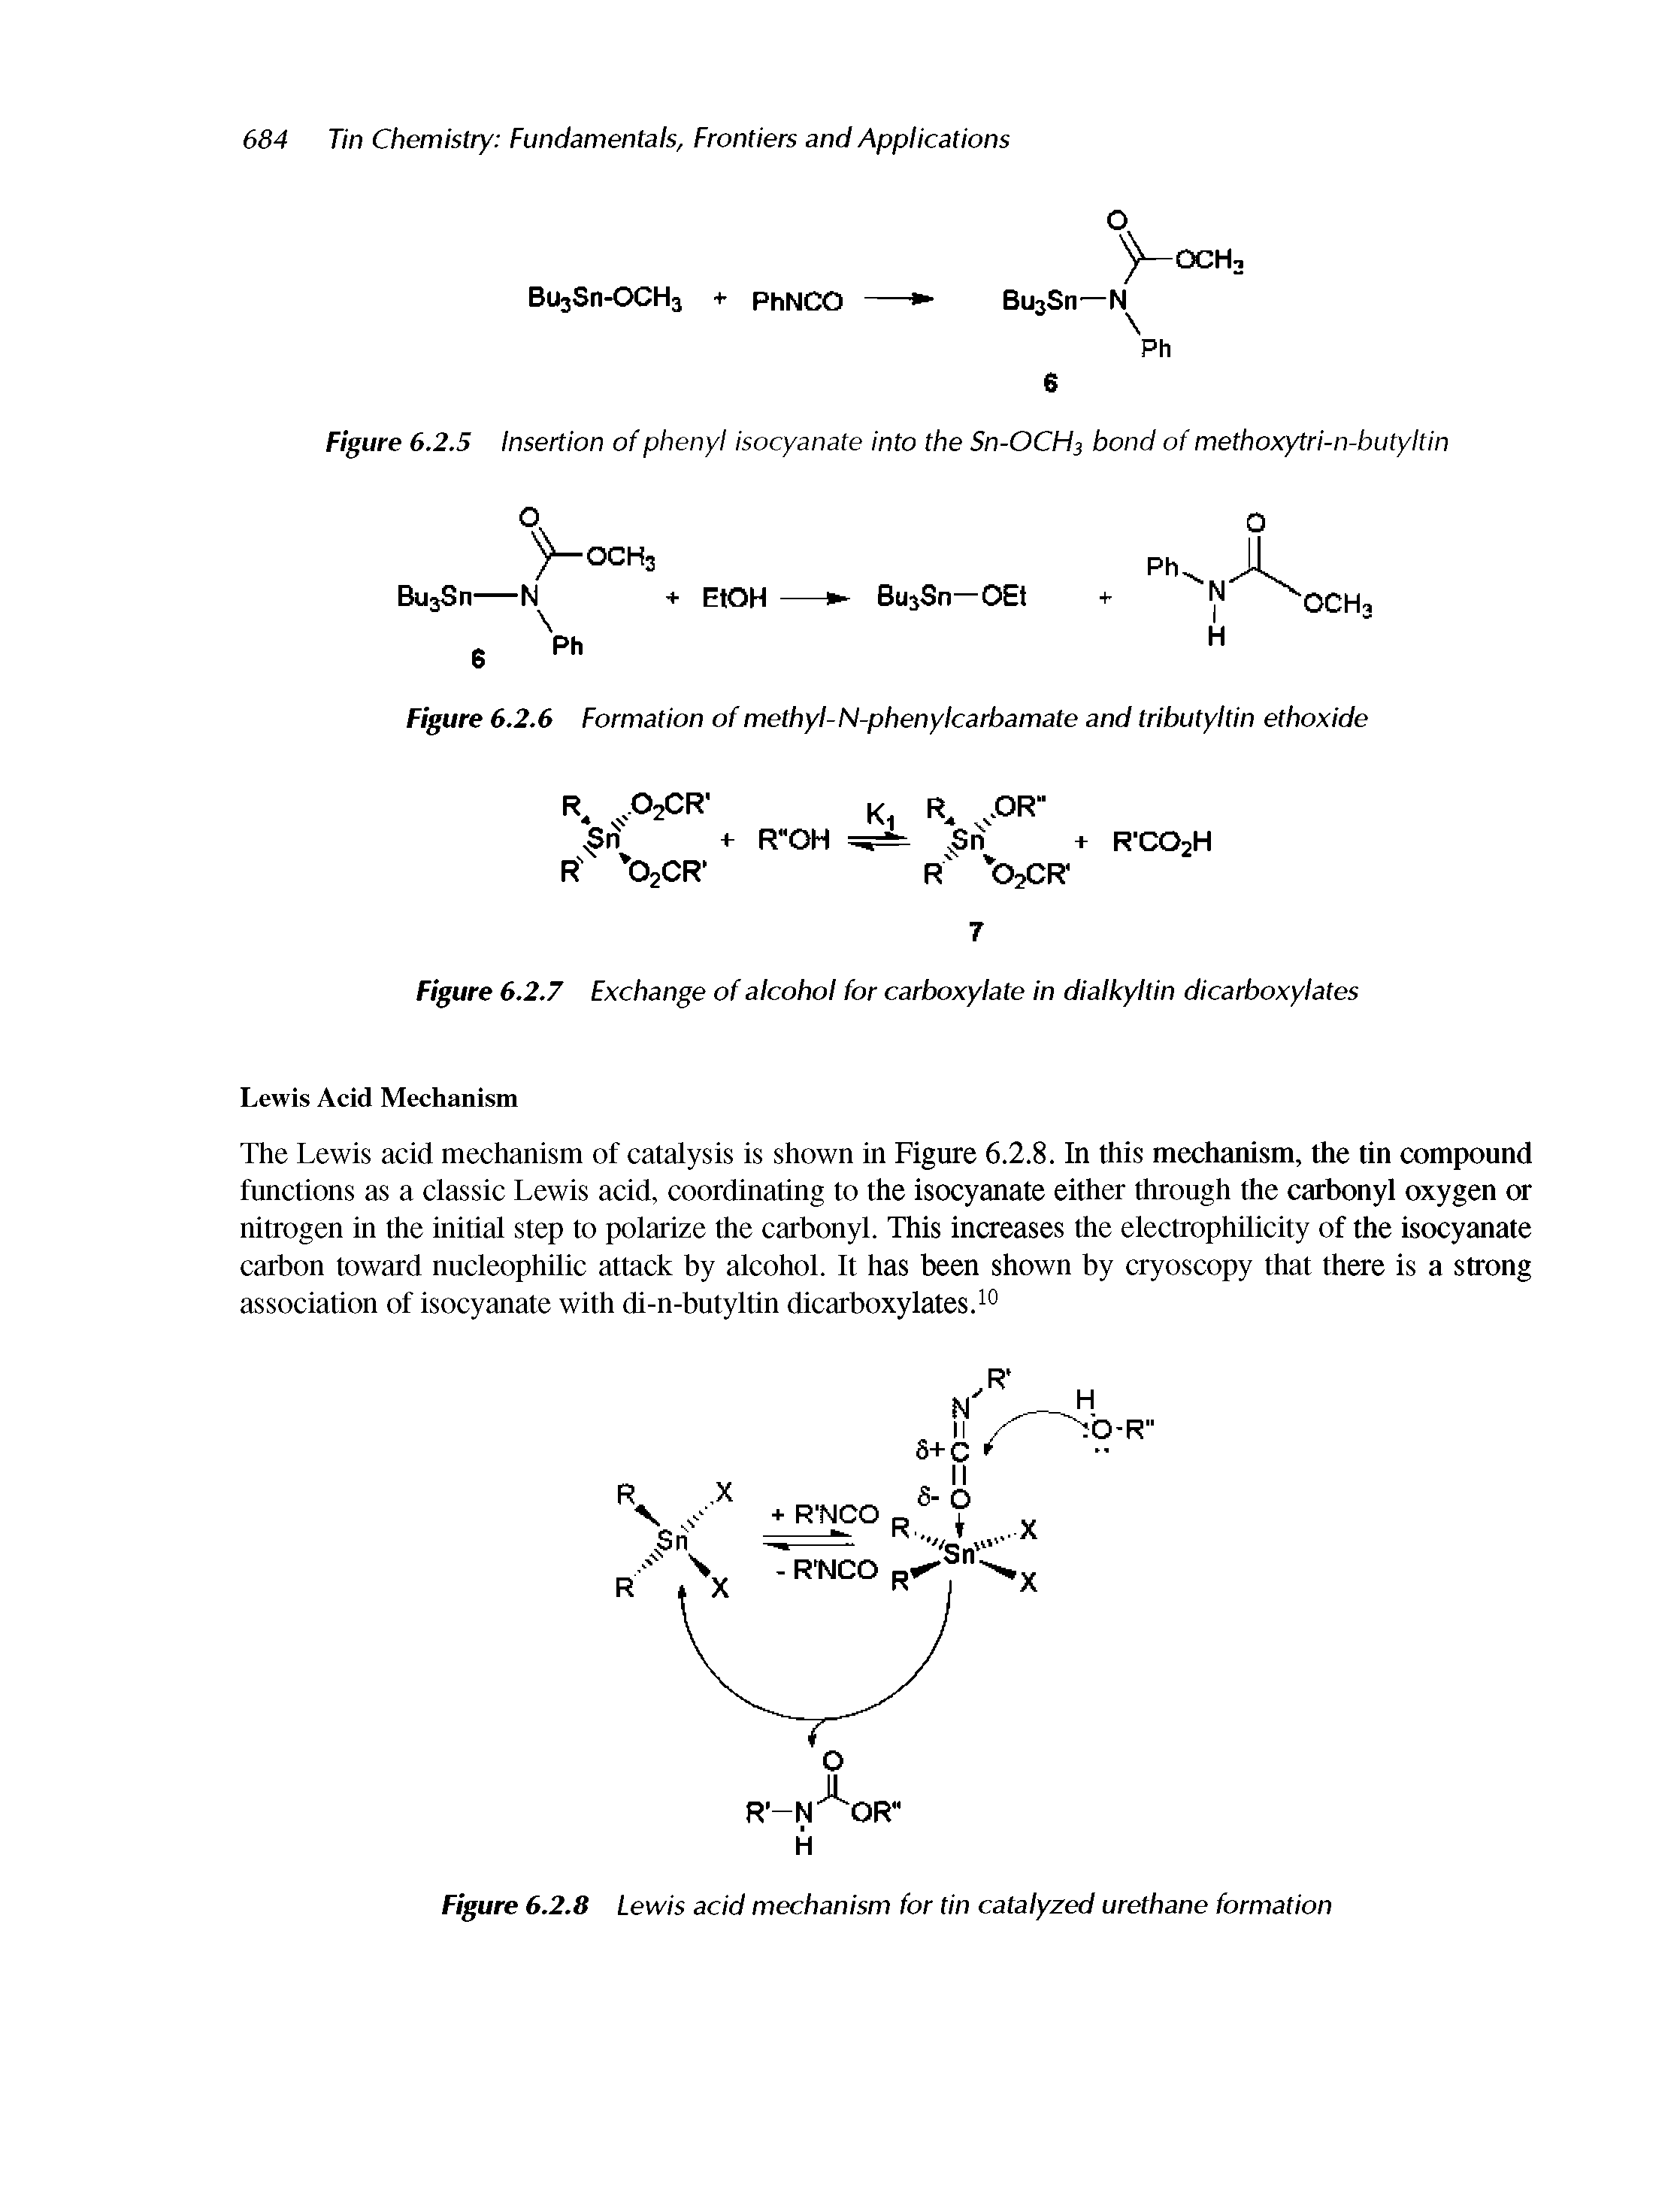 Figure 6.2.8 Lewis acid mechanism for tin catalyzed urethane formation...